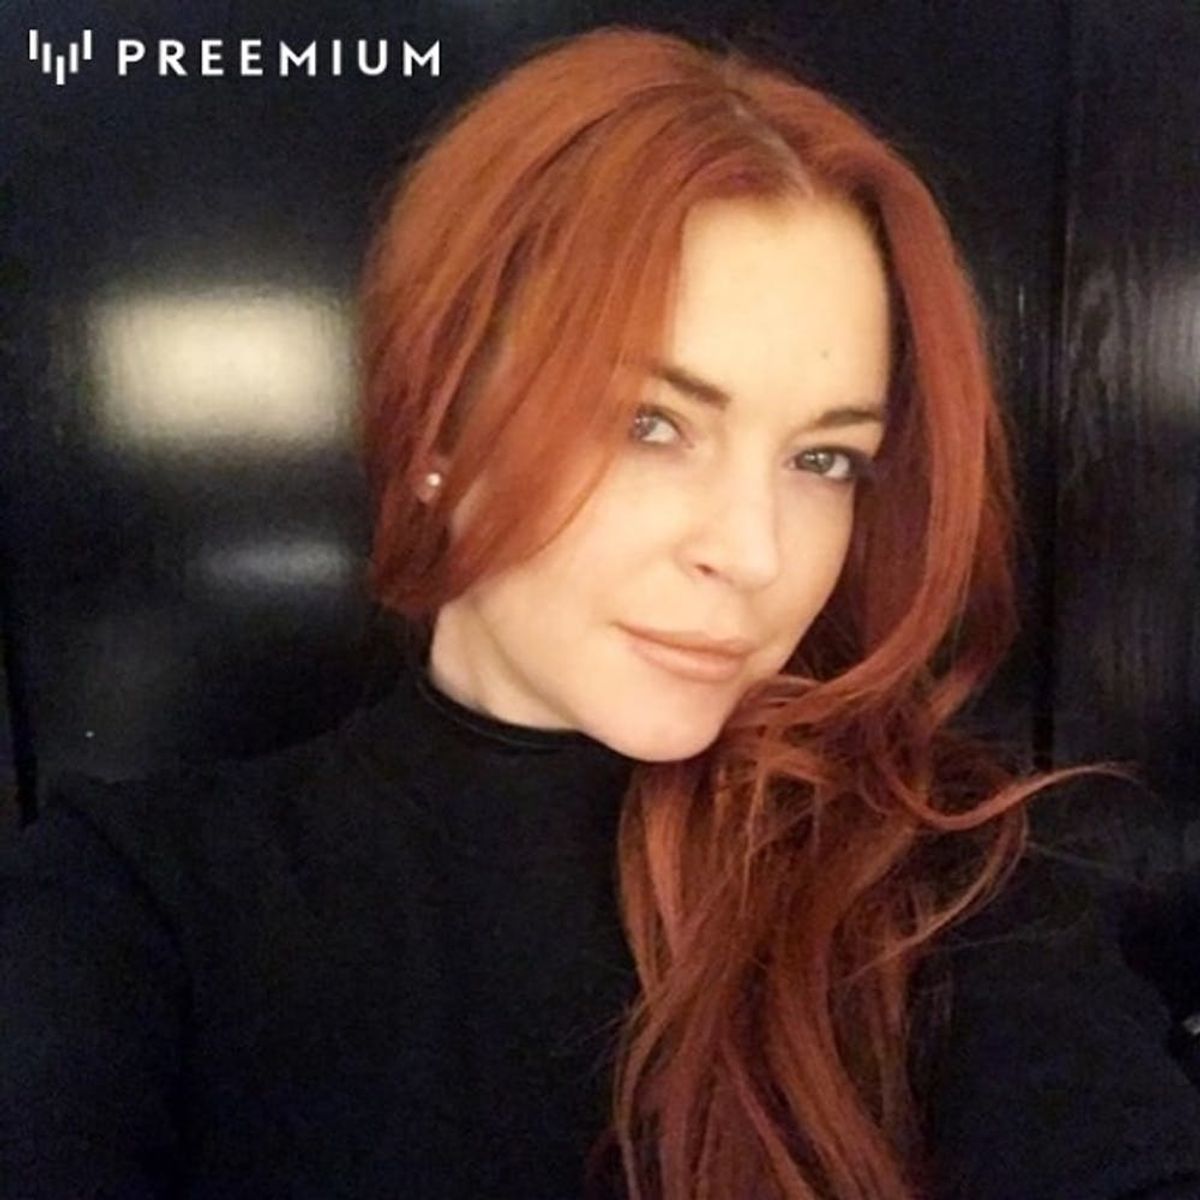 Lindsay Lohan Is Launching a Goop-Like Lifestyle Website… But It’ll Cost Ya